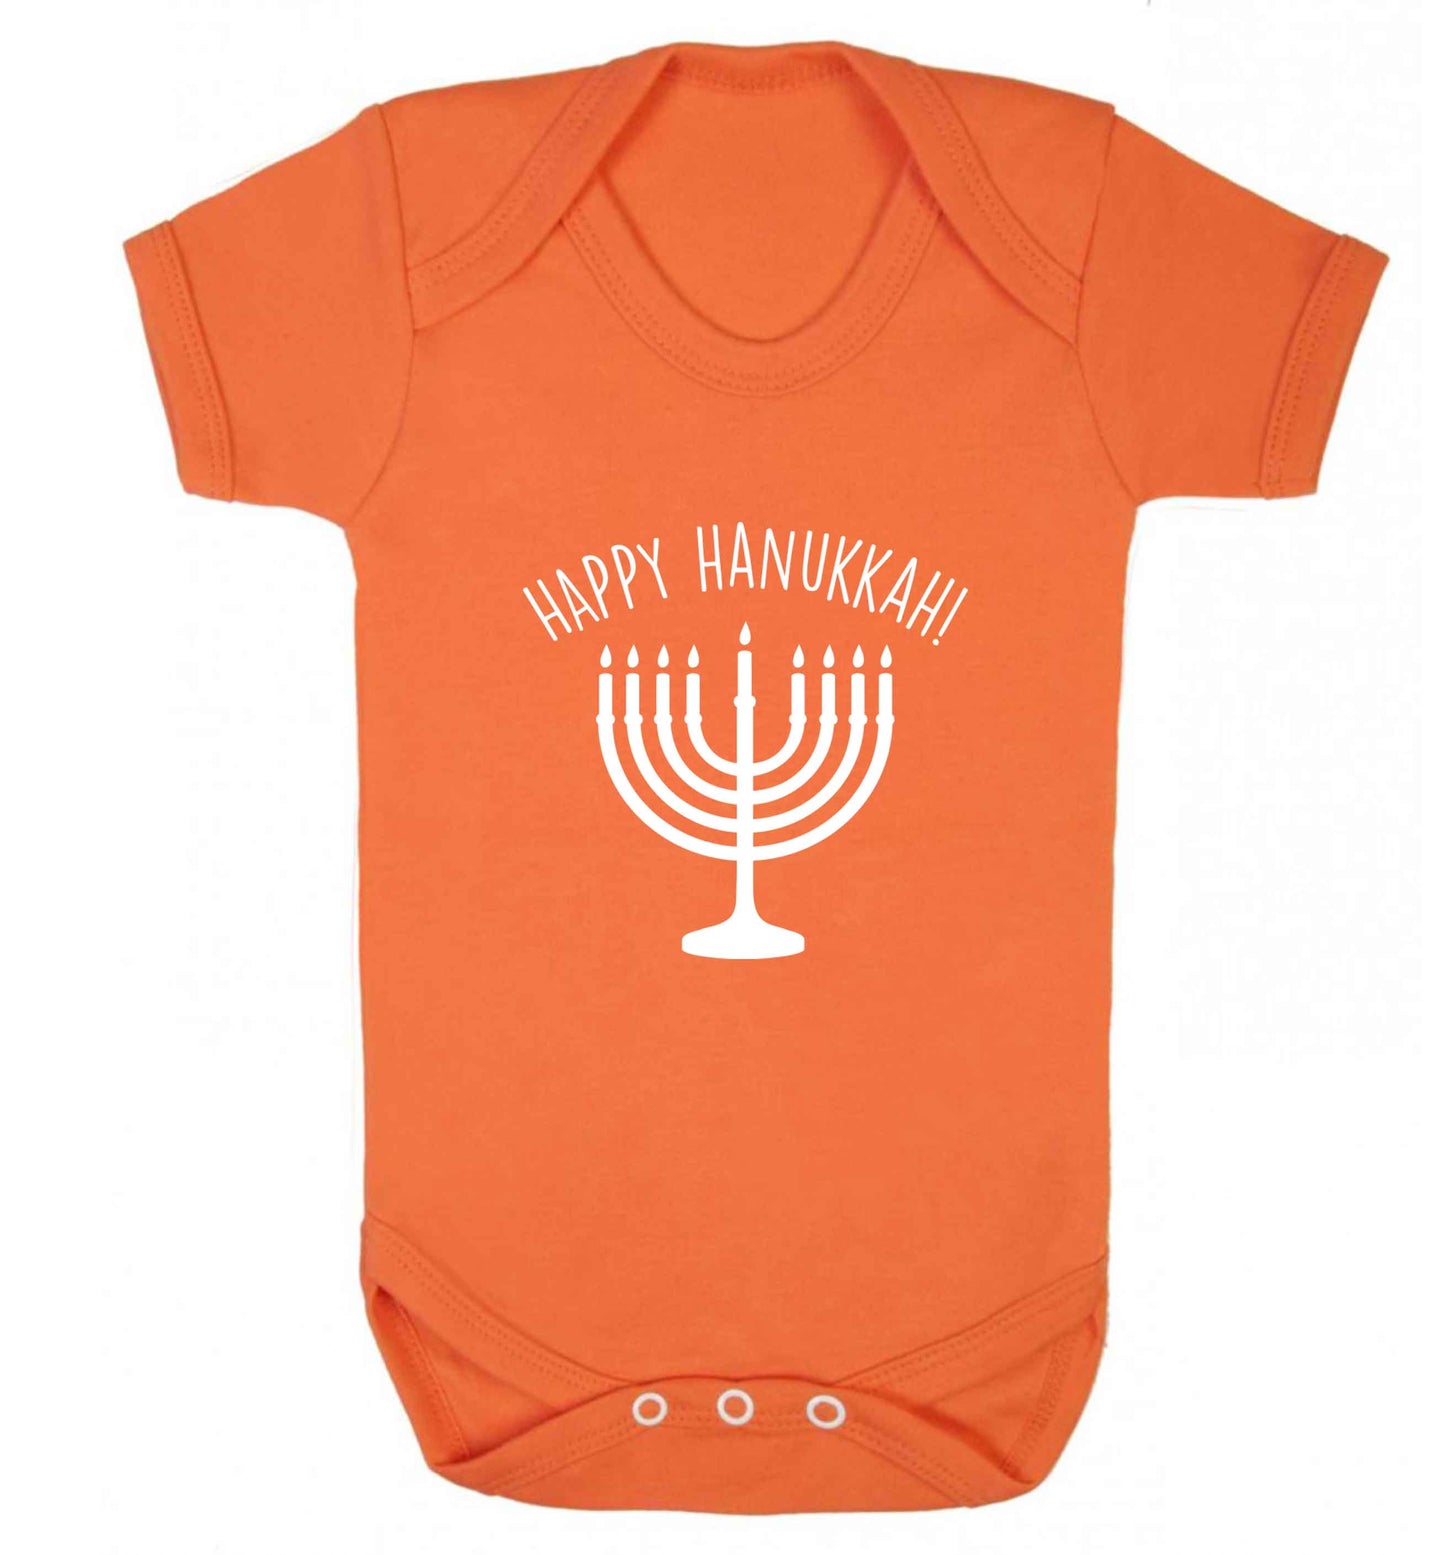 Happy hanukkah baby vest orange 18-24 months